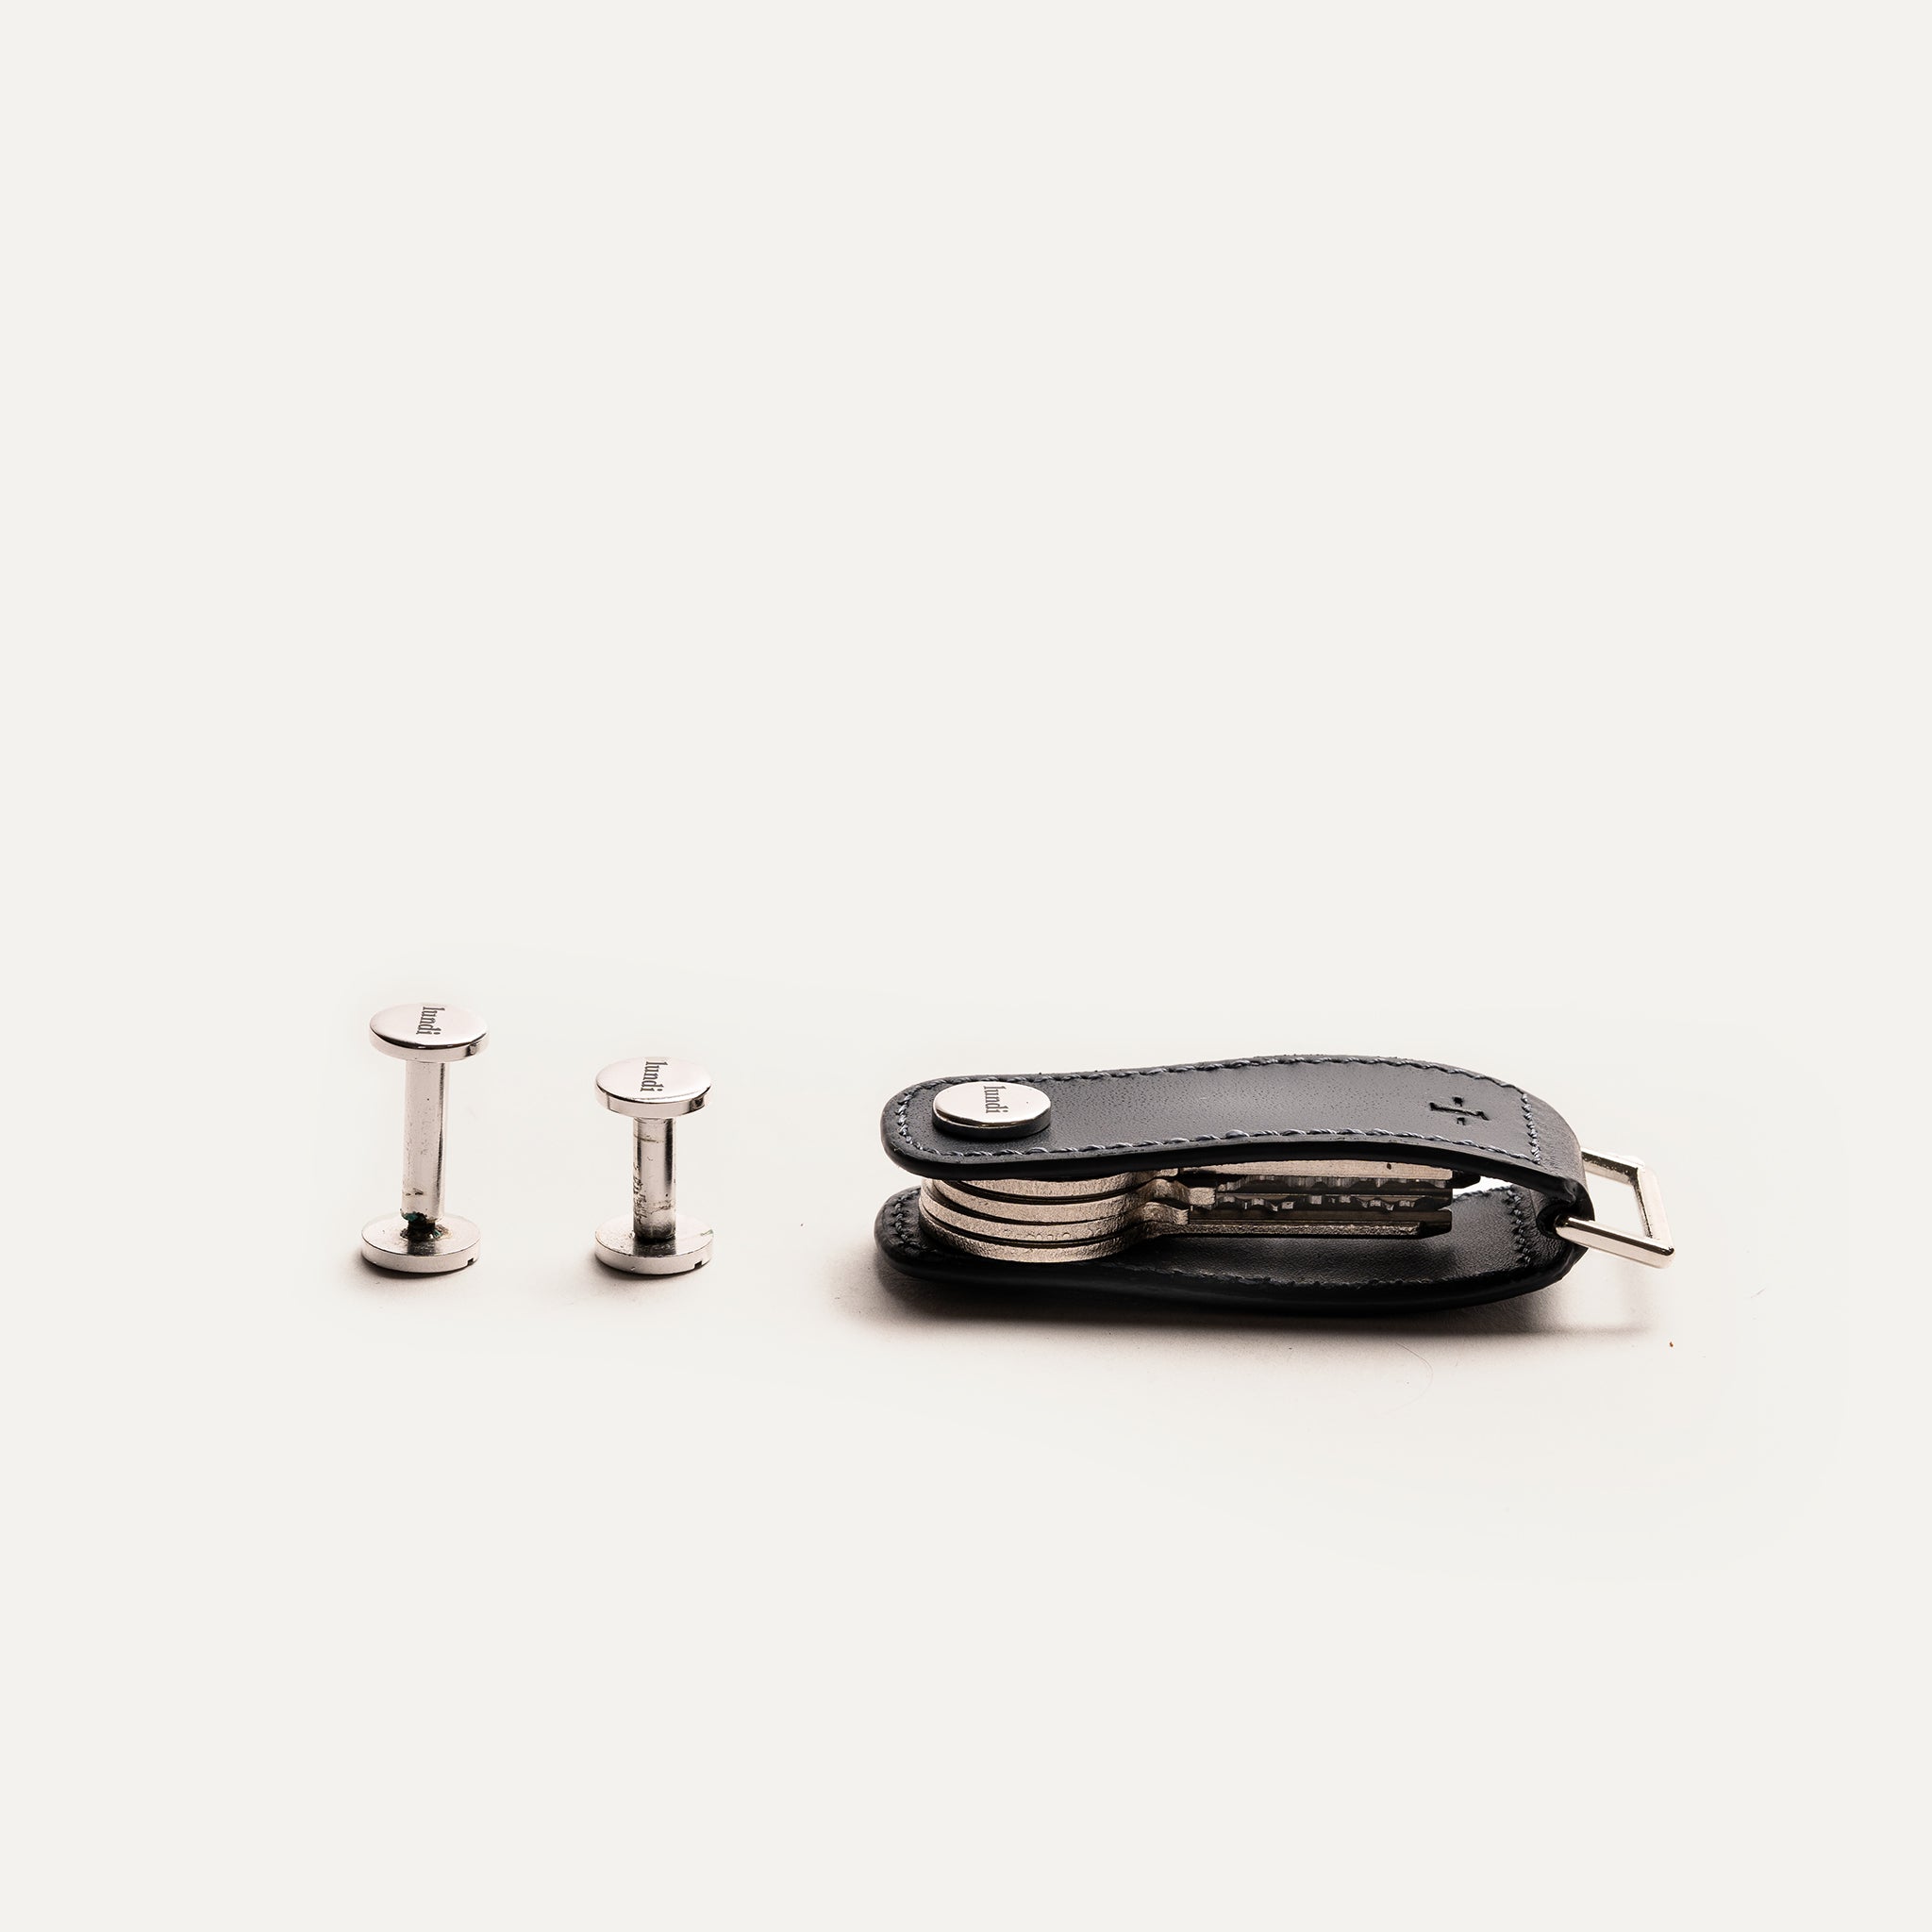 Leather Key Ring | Lucio Navy